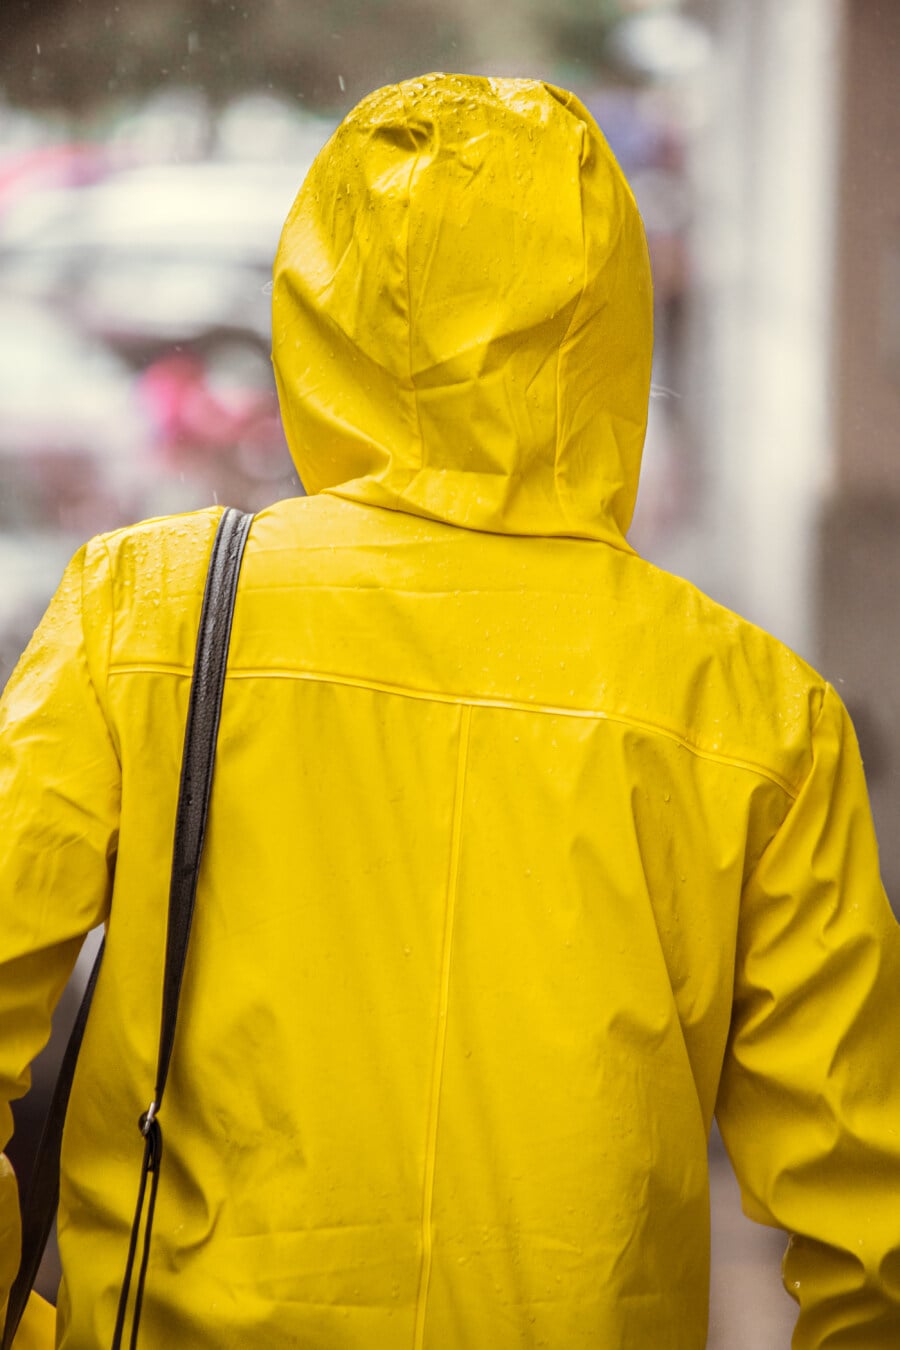 waterproof, rain, yellow, jacket, person, bad weather, raindrop, rainy season, outdoors, man